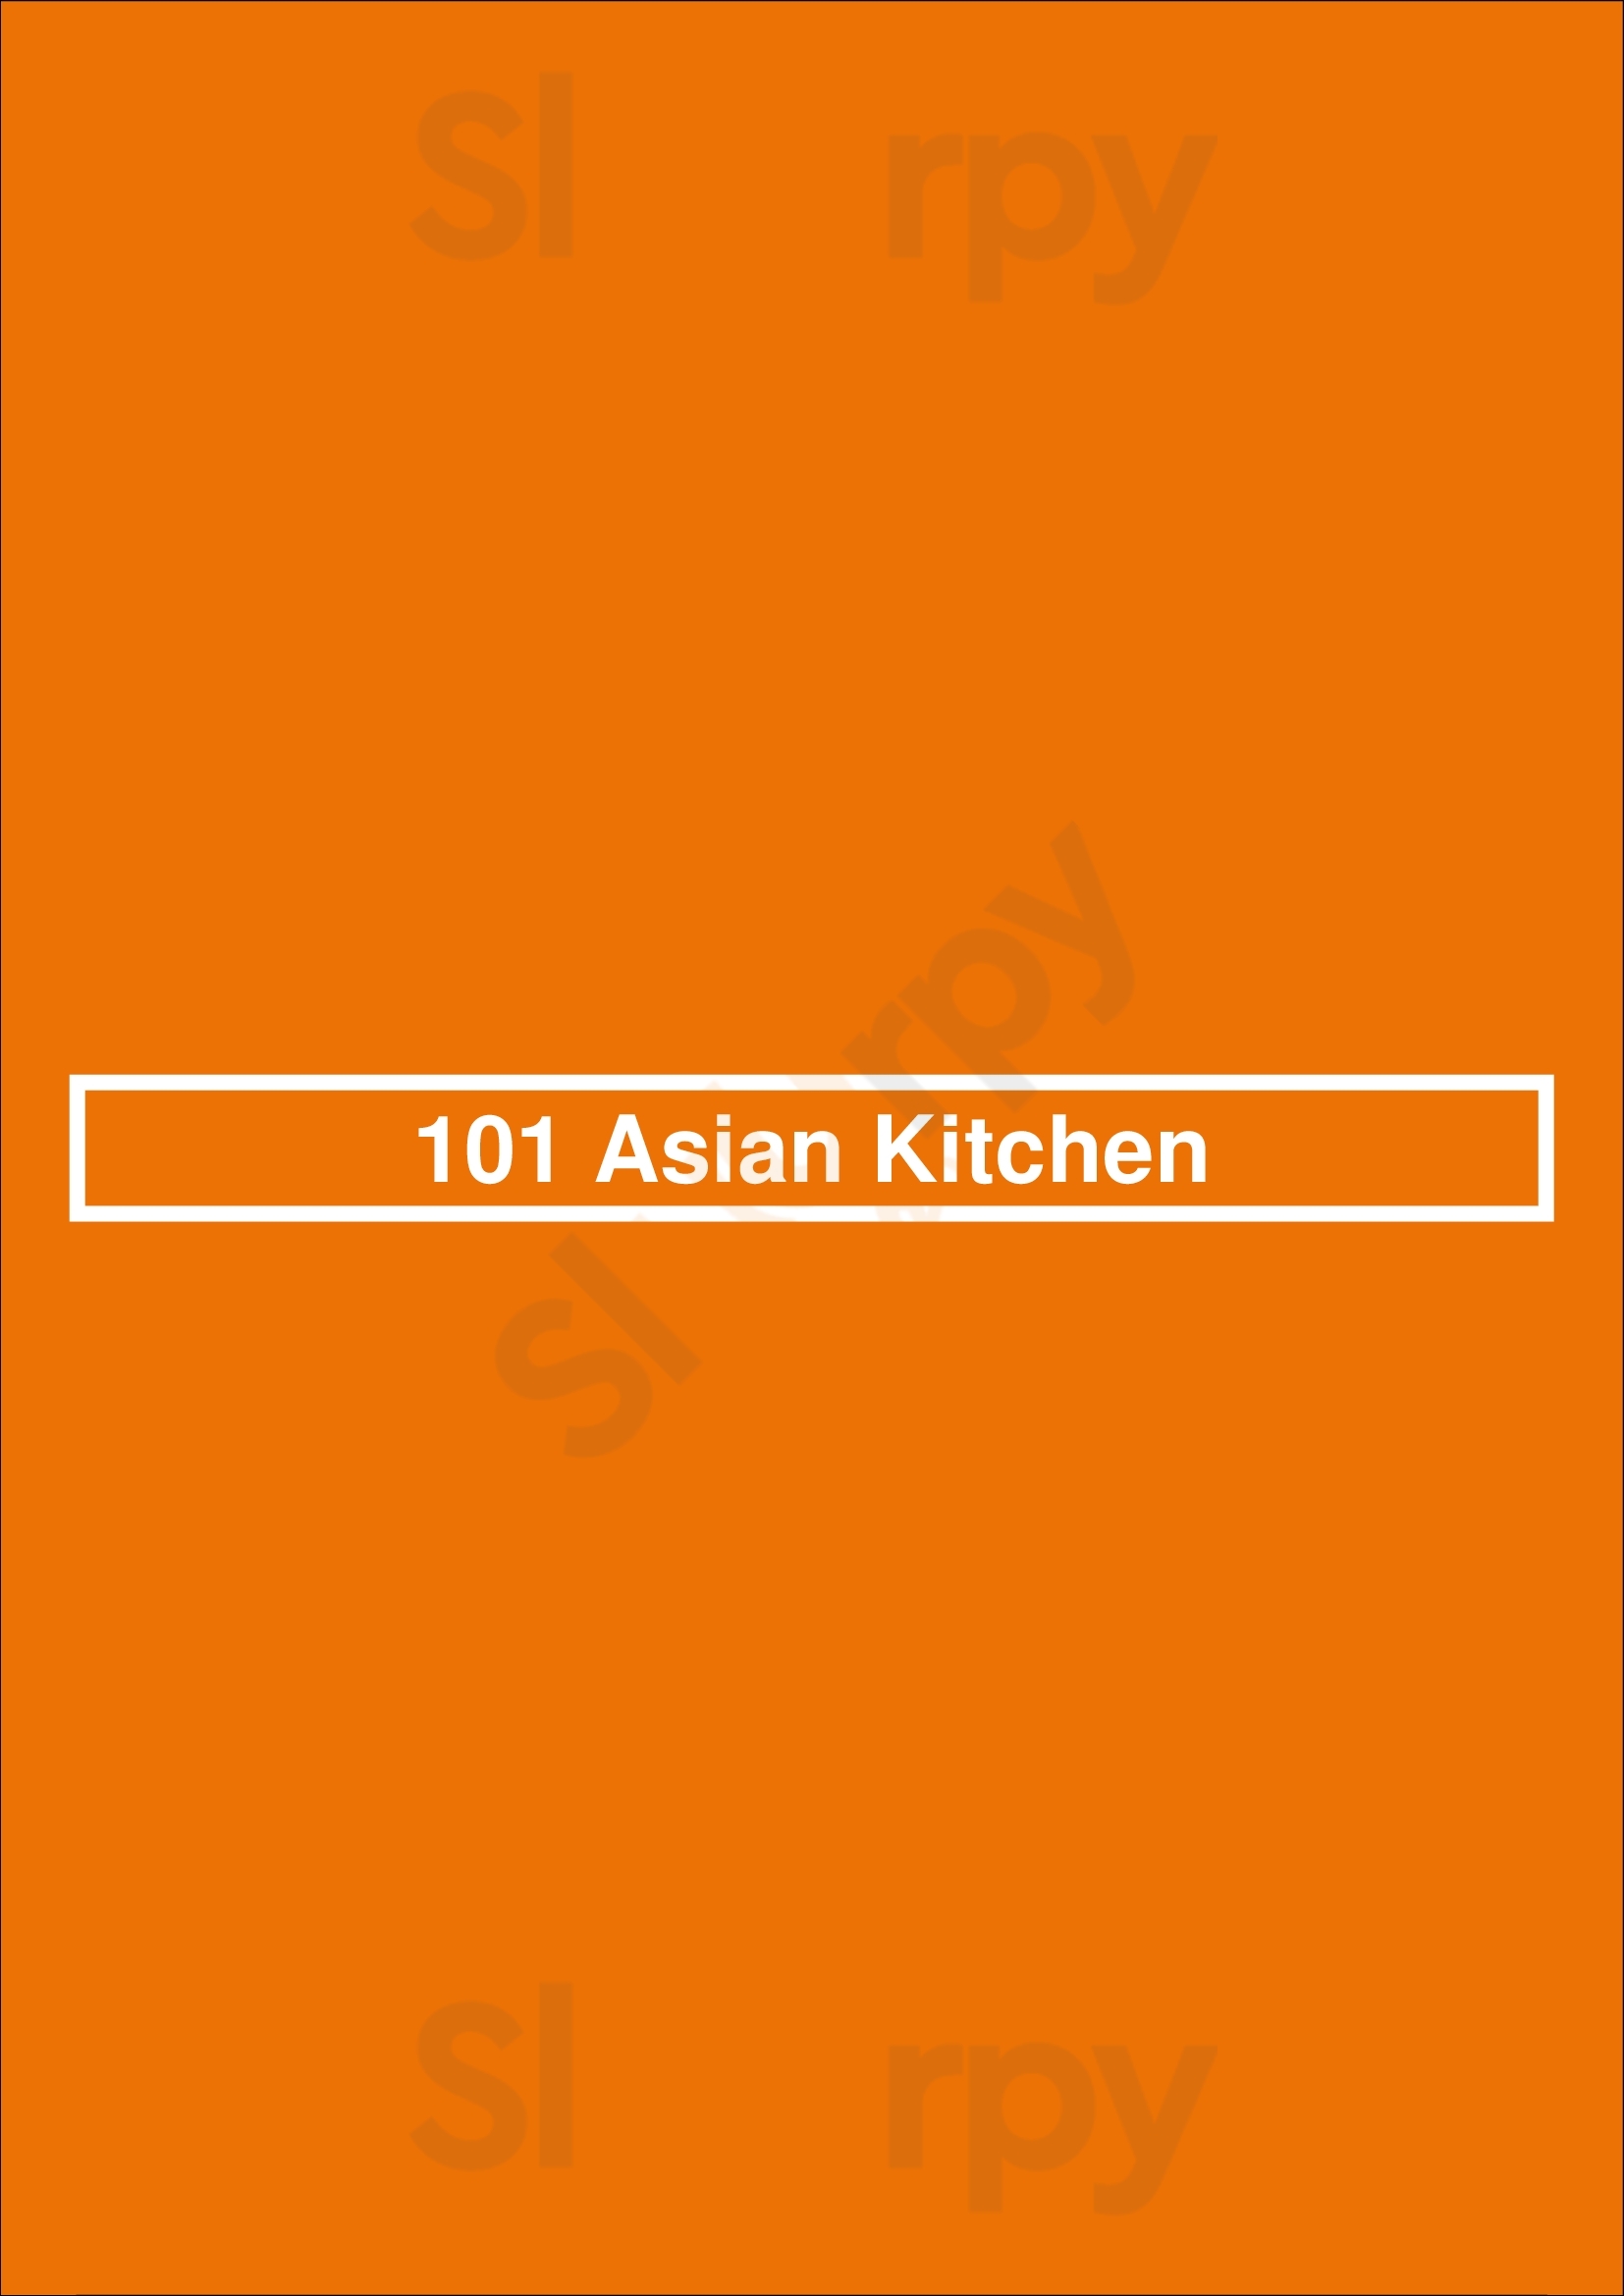 101 Asian Kitchen Los Angeles Menu - 1